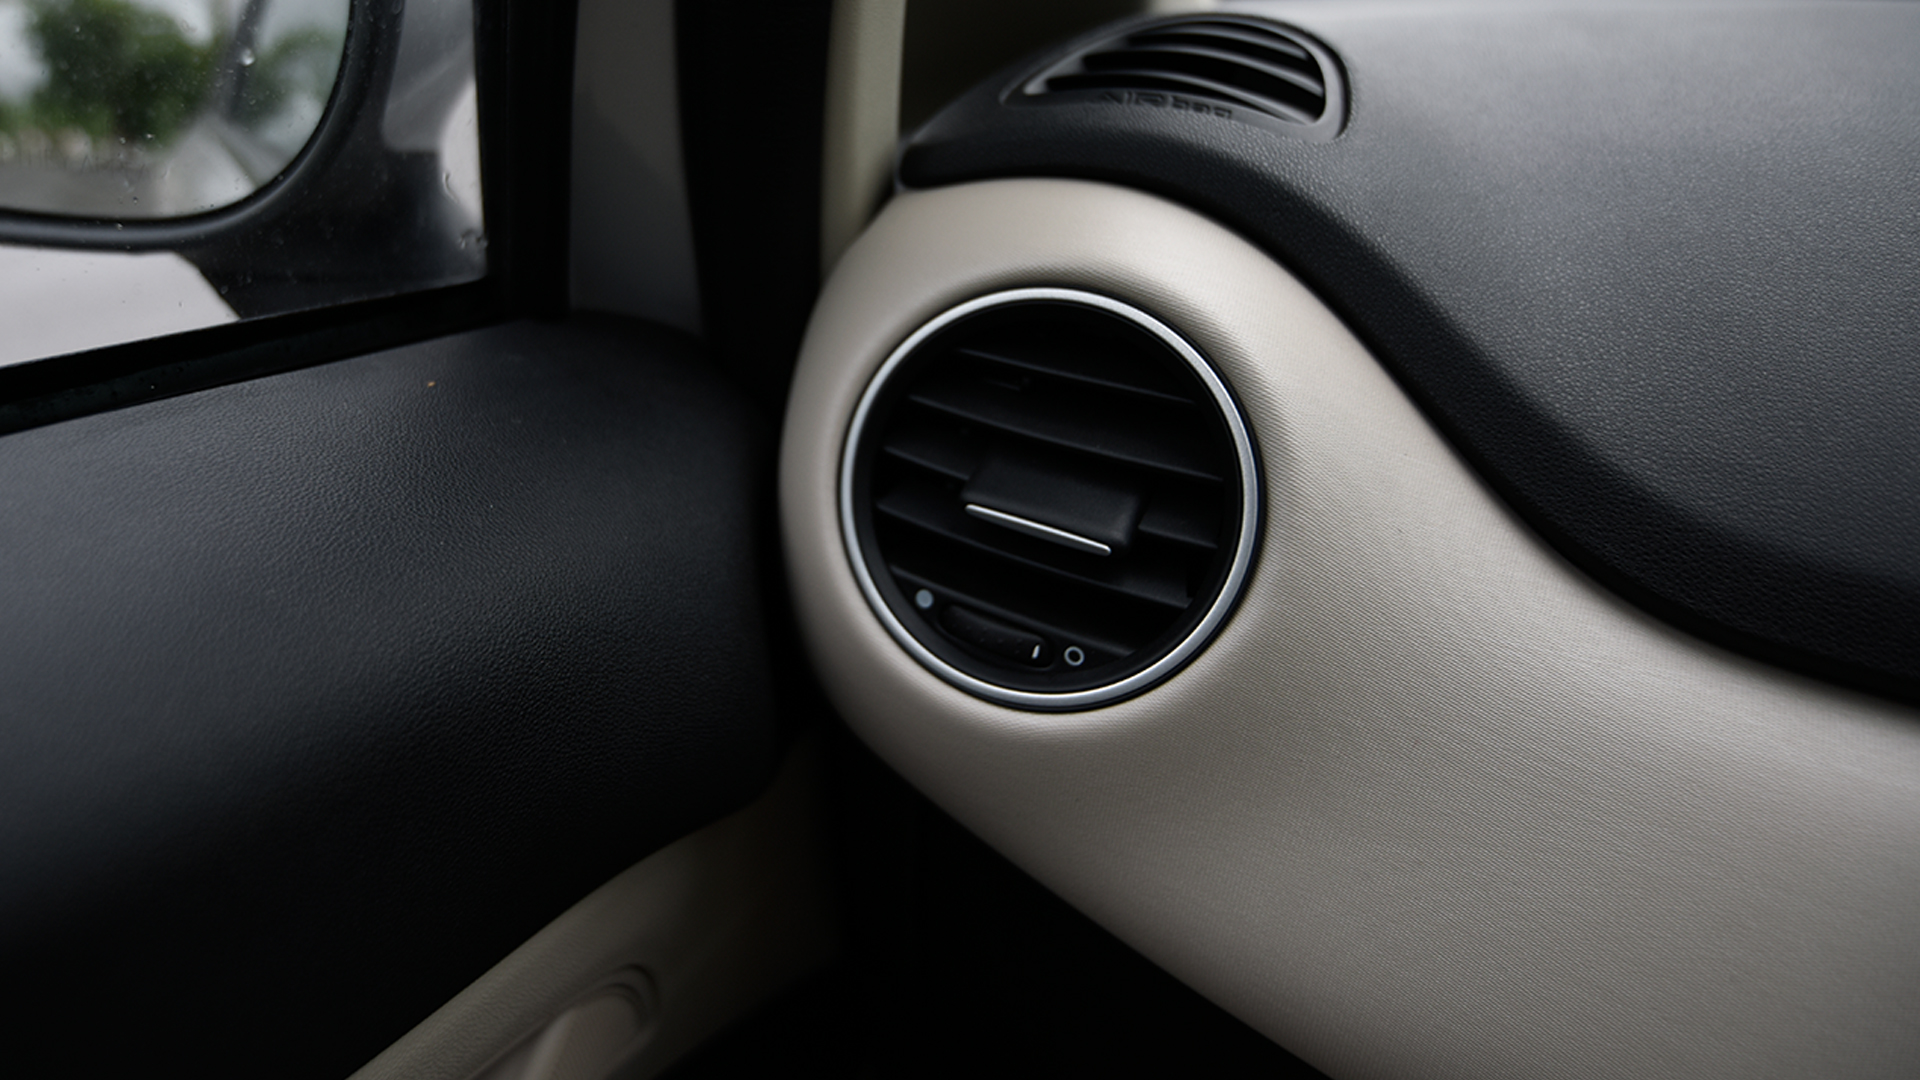 Fiat Linea 125 s 2016 T Jet Emotion Interior